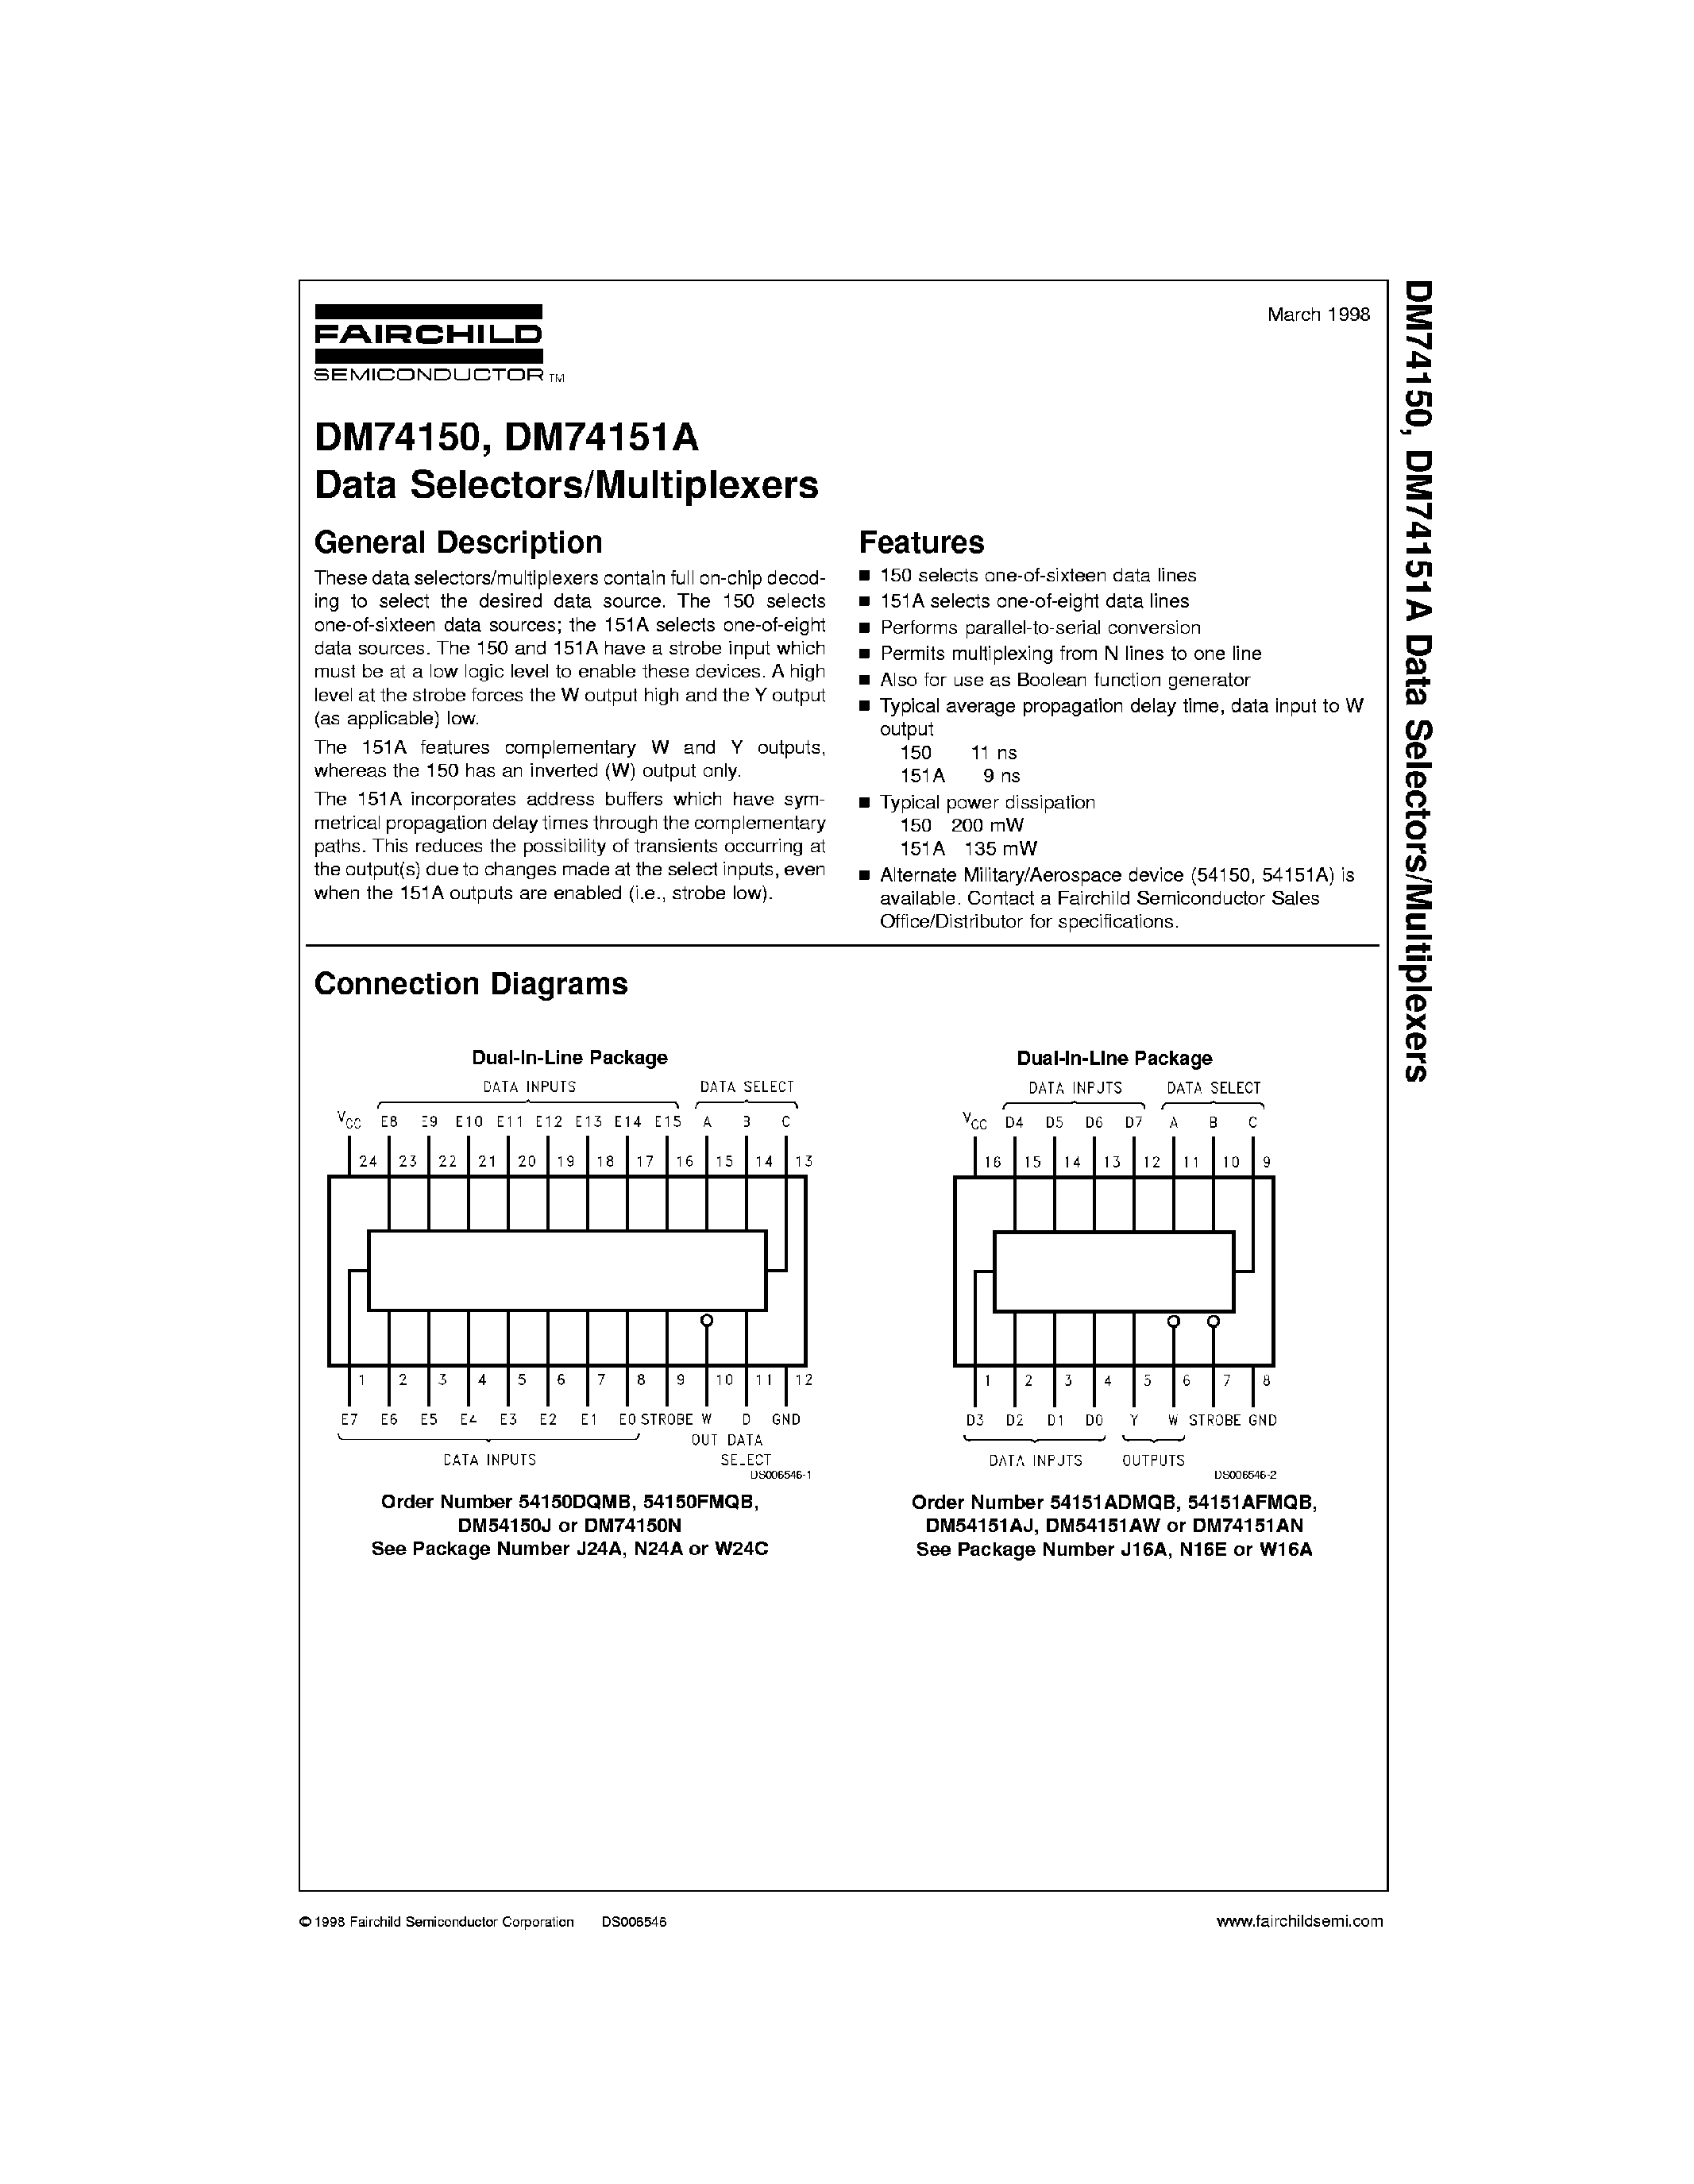 Datasheet 74150 - Data Selectors / Multiplexers page 1